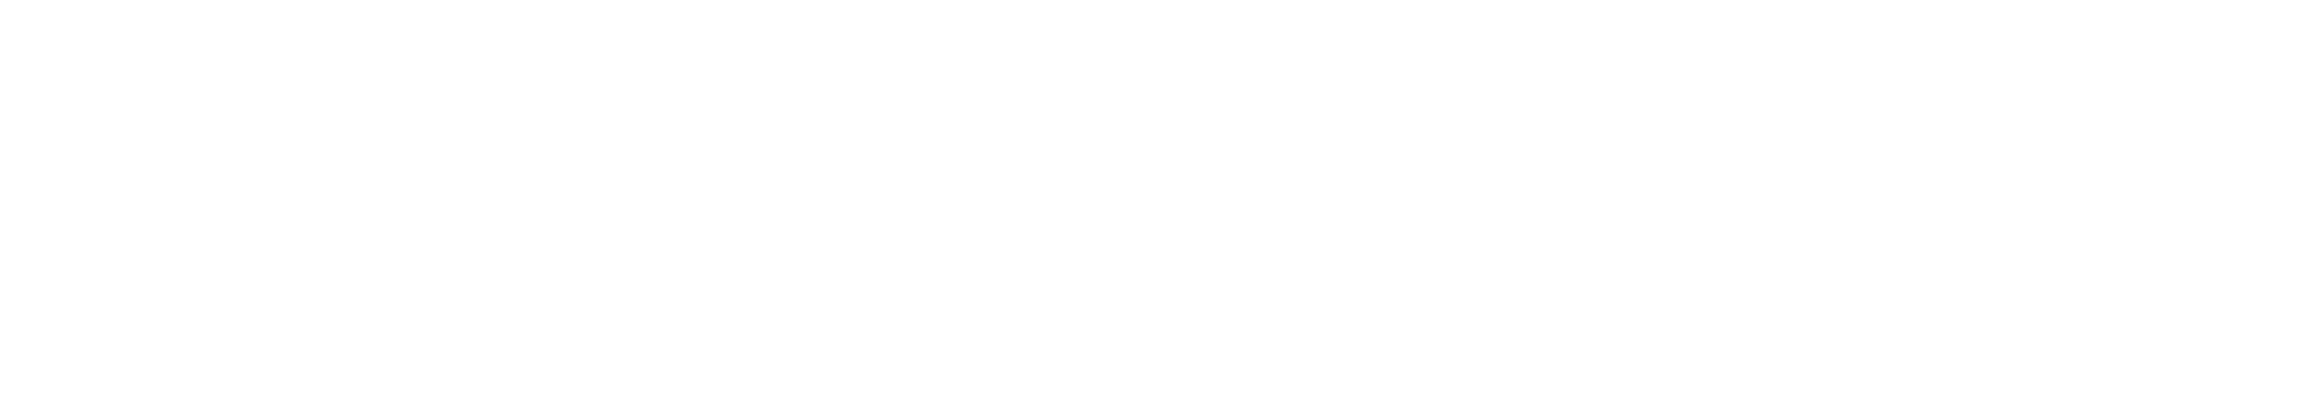 Harbor Group Management logo for Miro Brickell